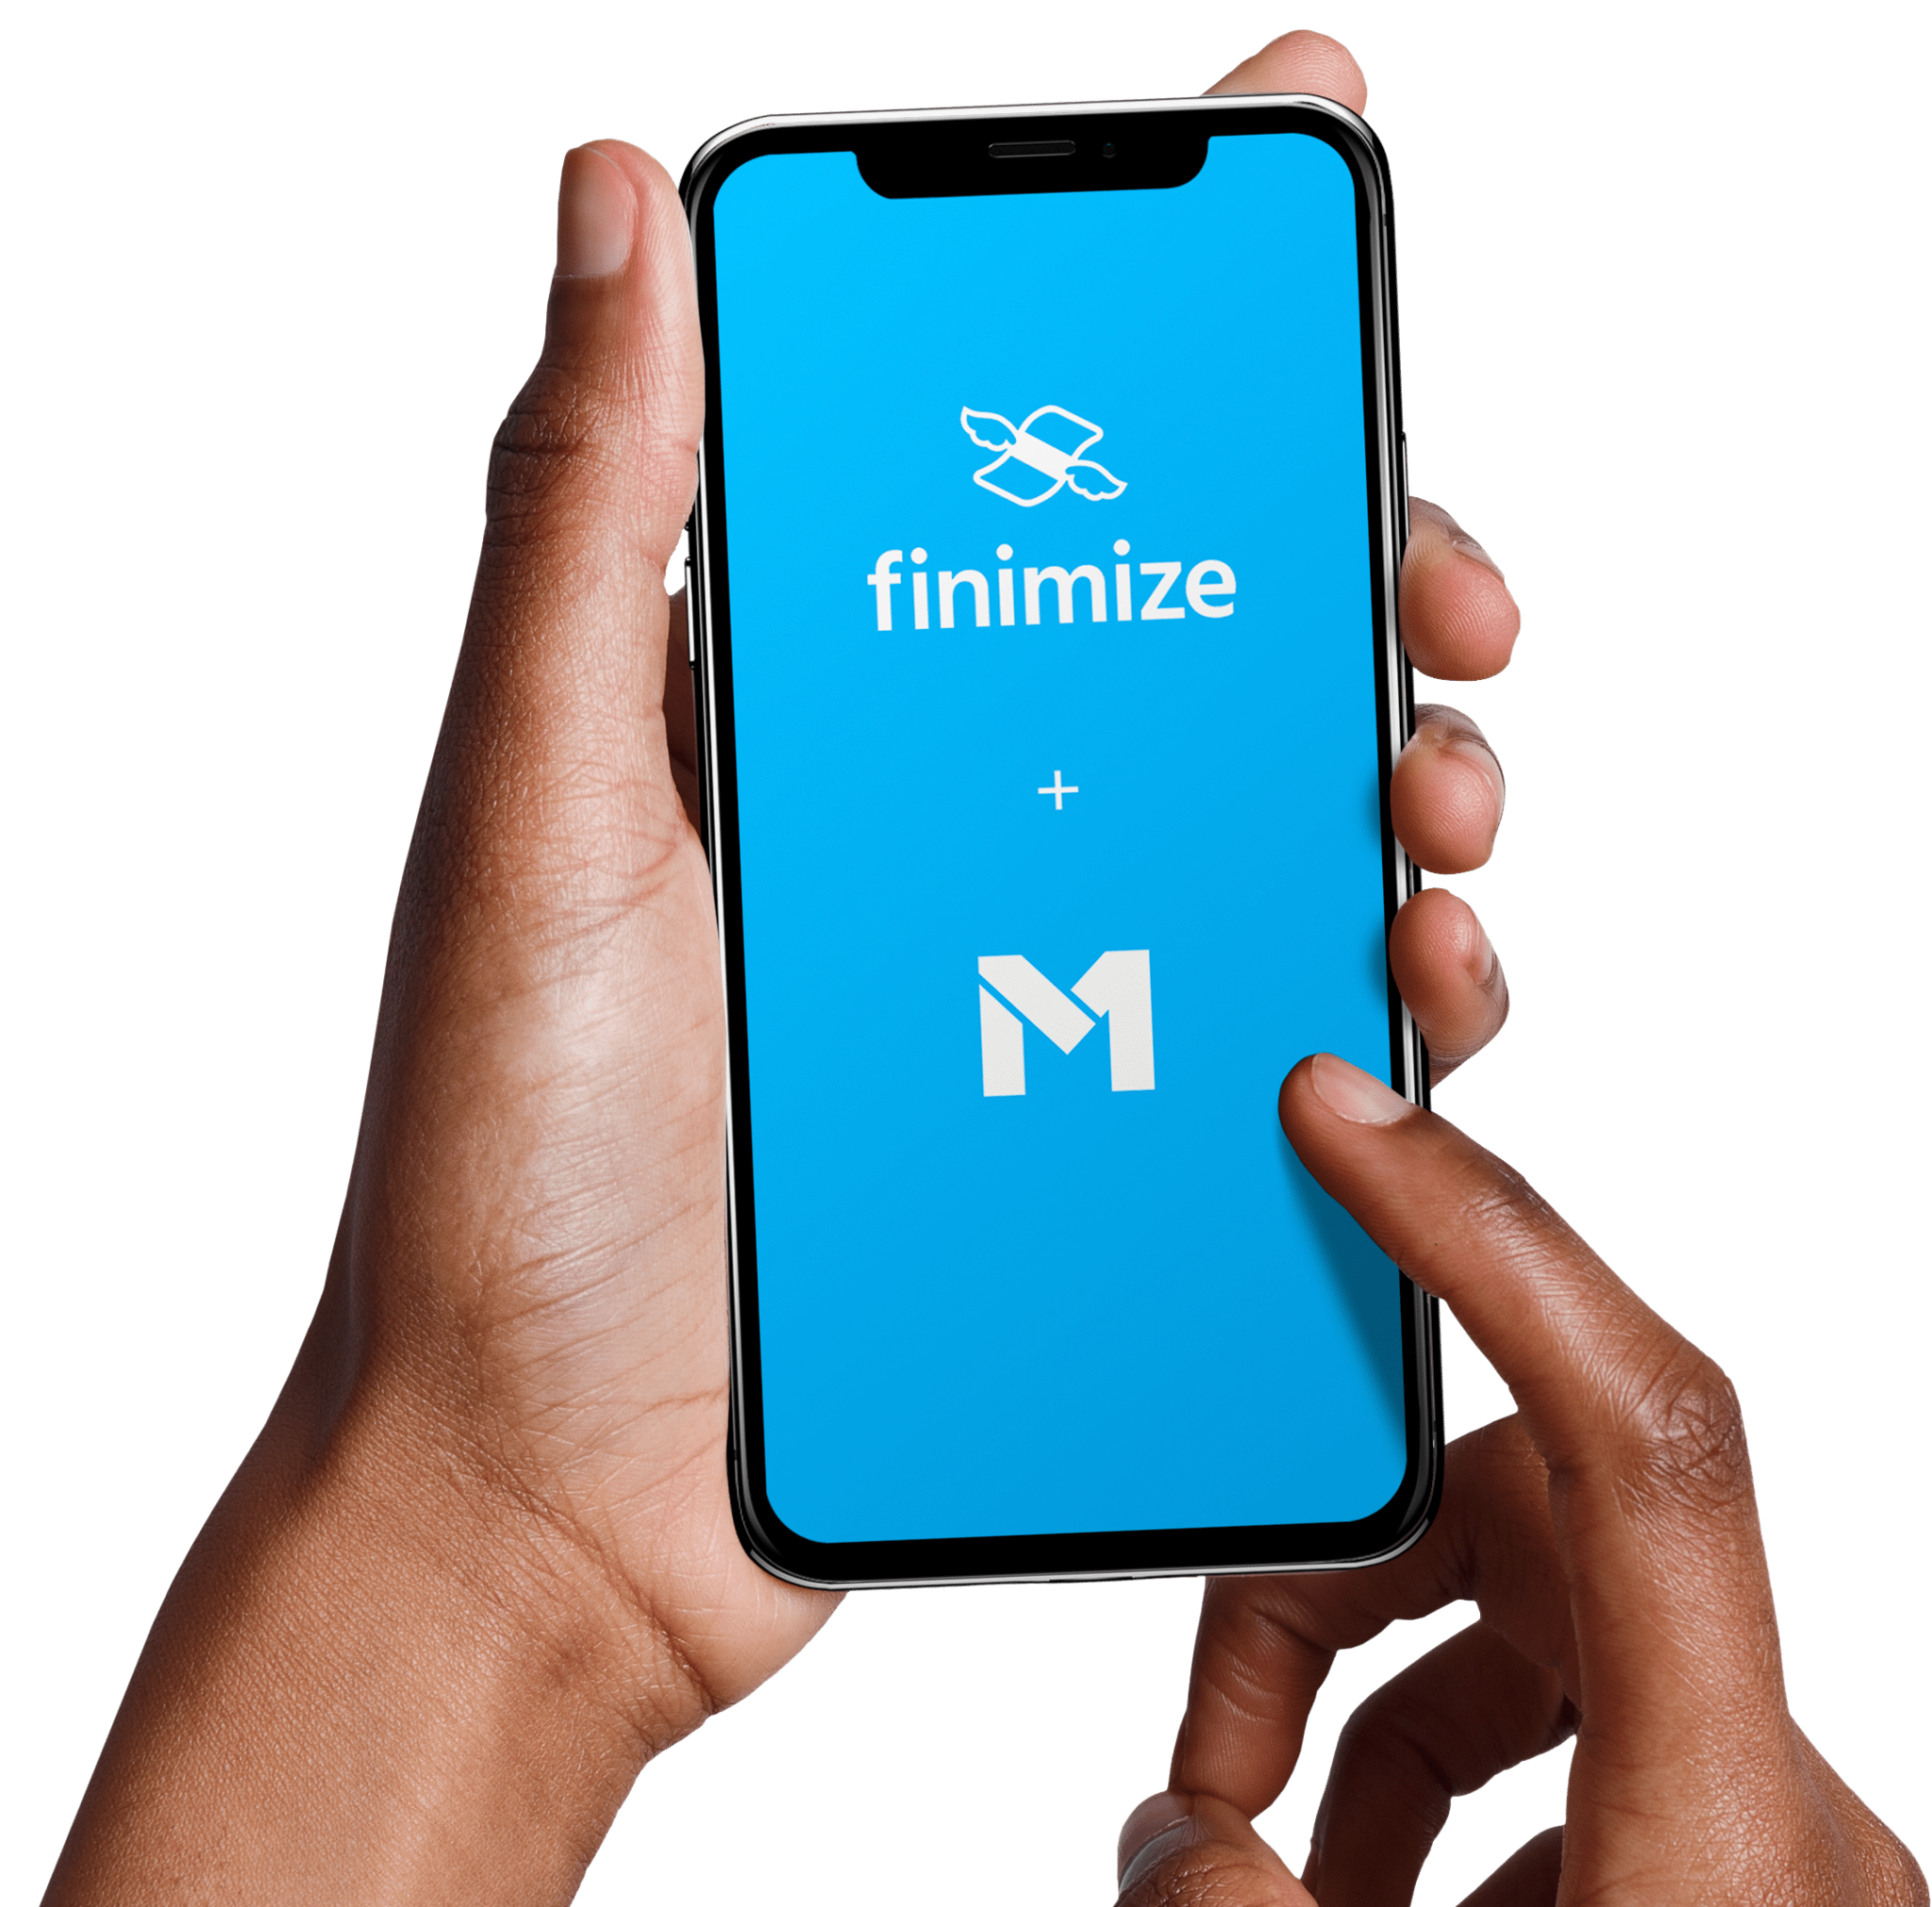 Phone displaying finimize logo and M1 Finance logo